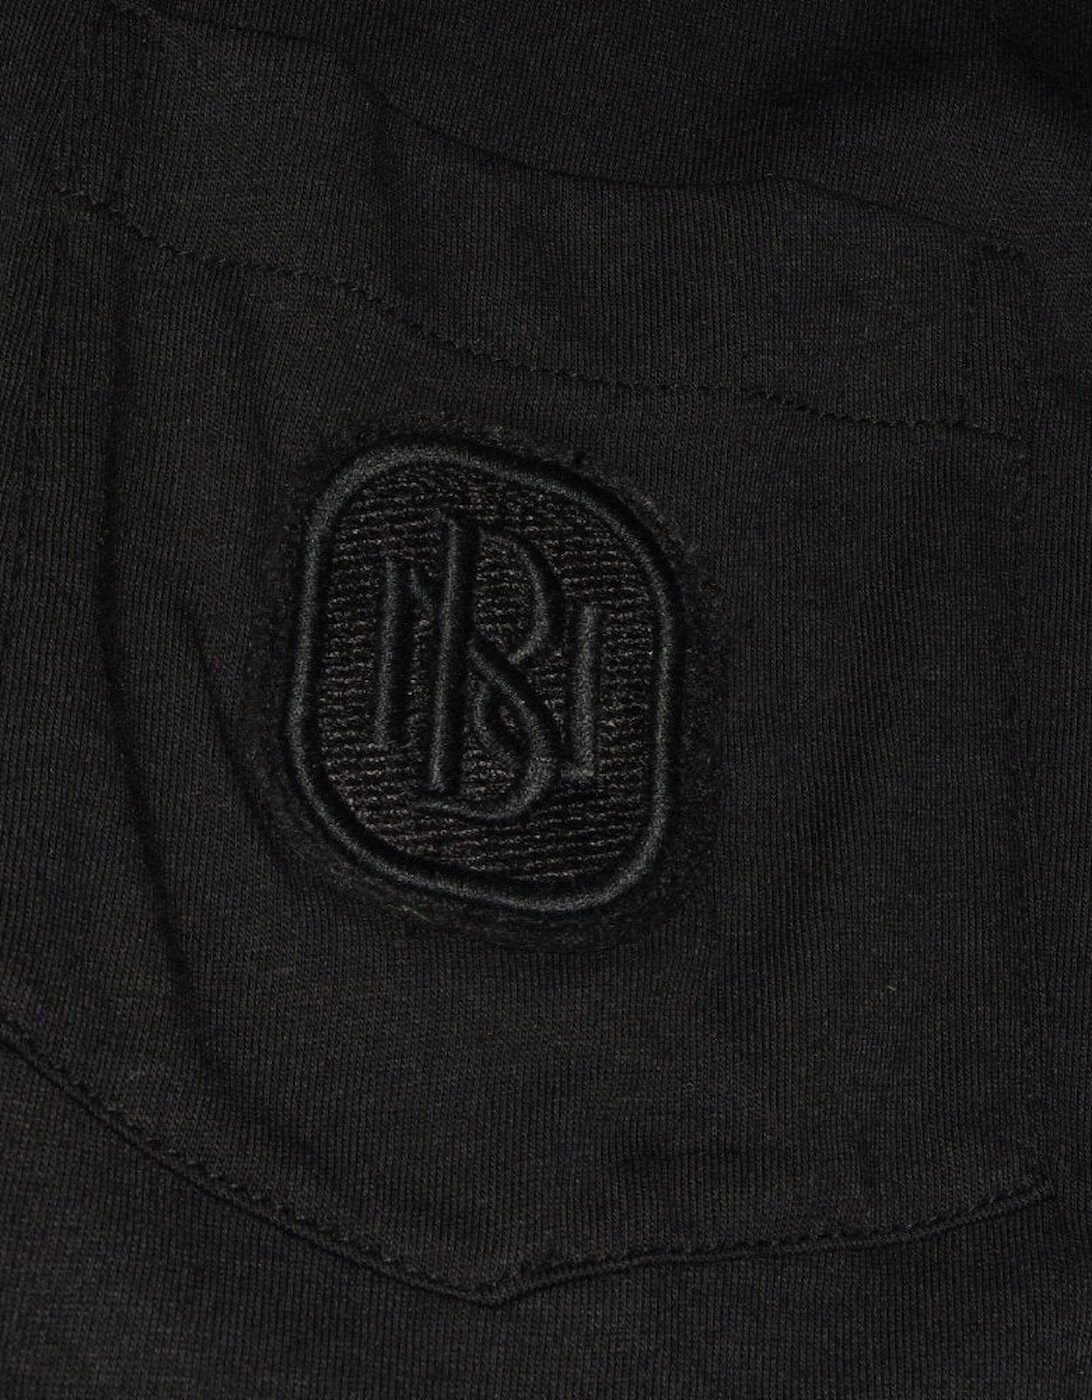 Men's Pocket Logo T-shirt Black